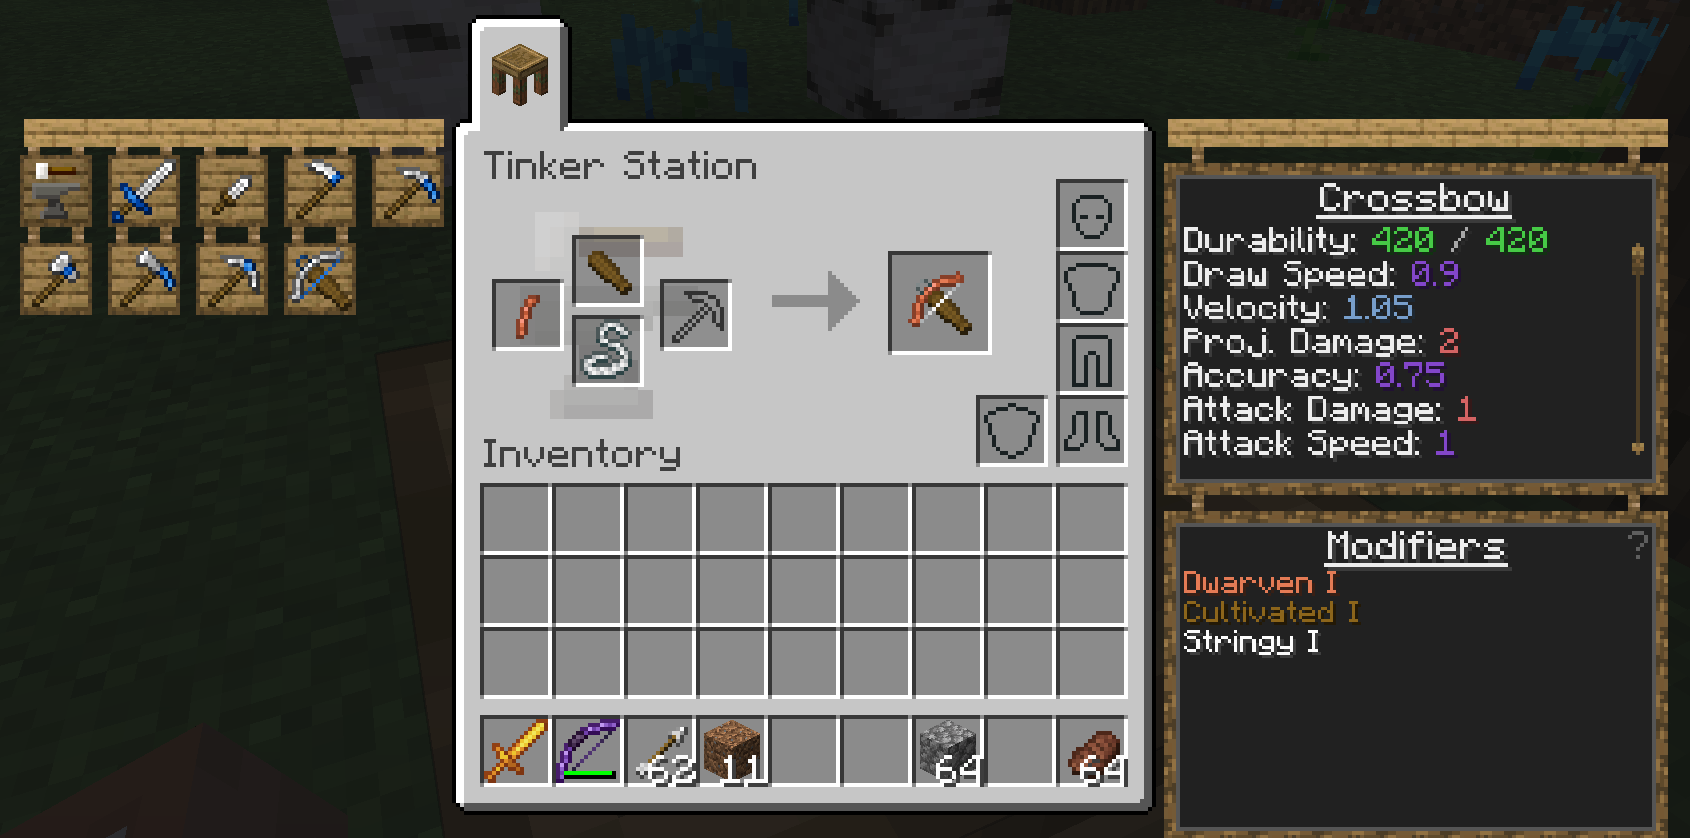 Tinker Station UI